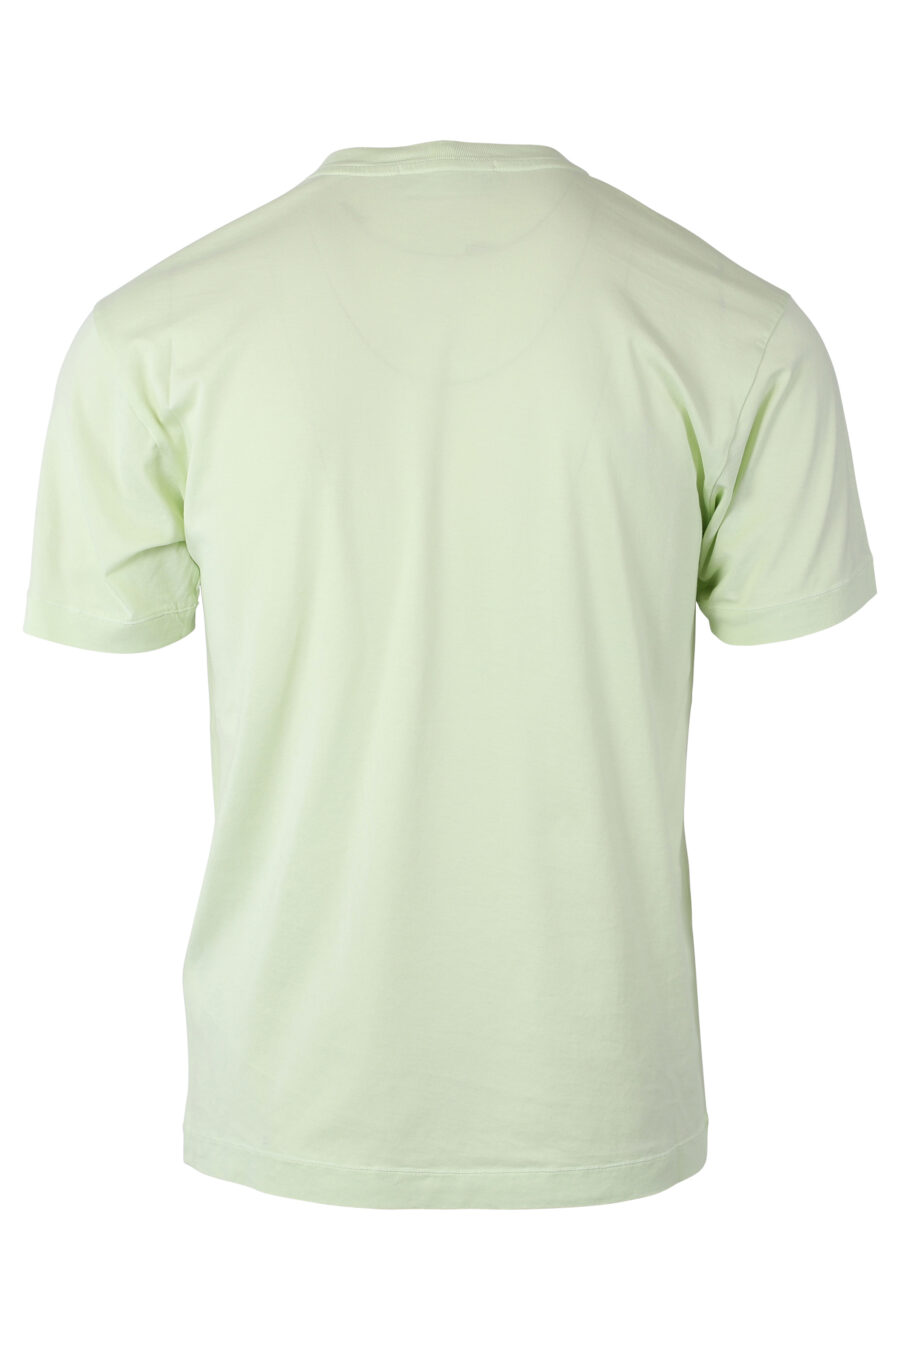 Camiseta verde con minilogo parche - IMG 1161